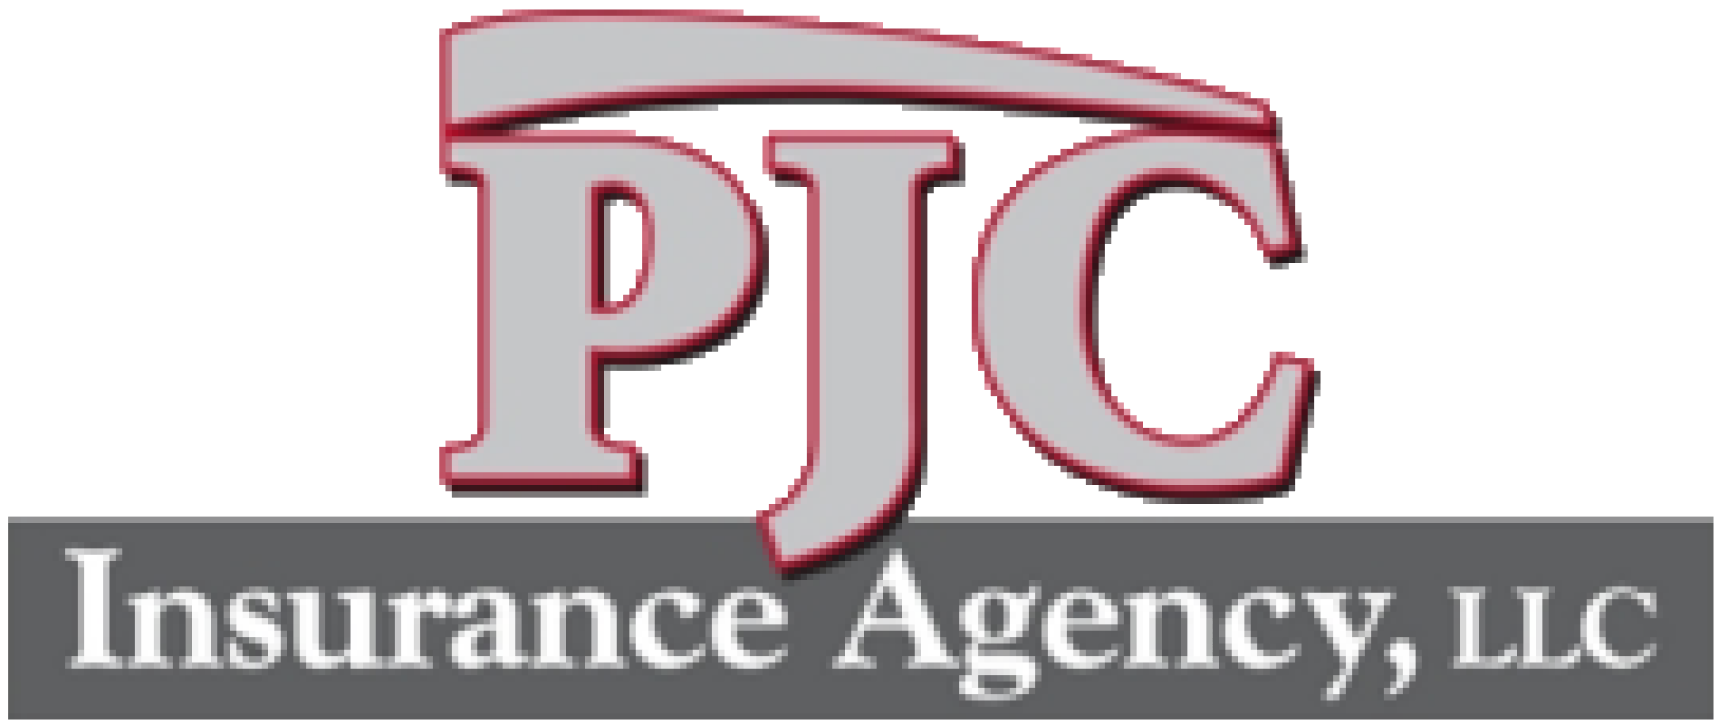 PJC Insurancr agency logo